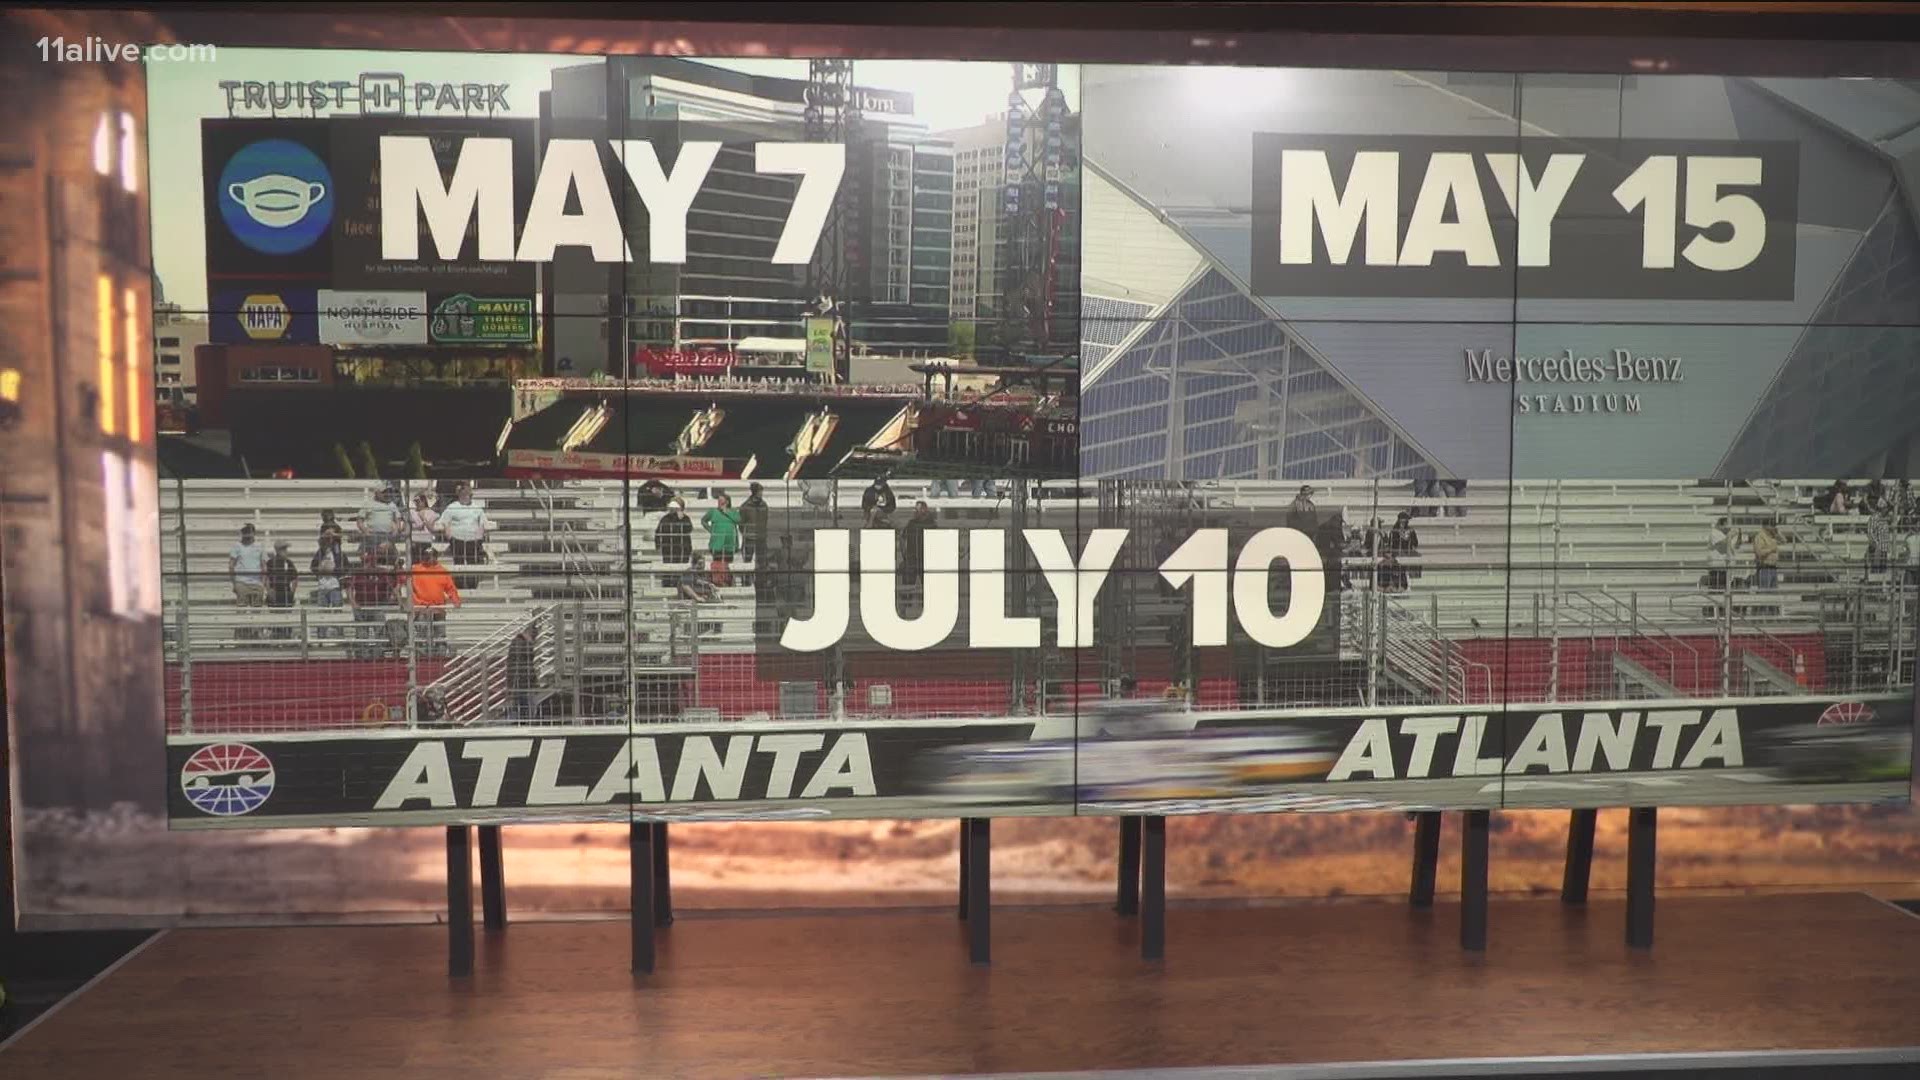 Atlanta Braves and Mercedes-Benz Stadium to allow full capacity